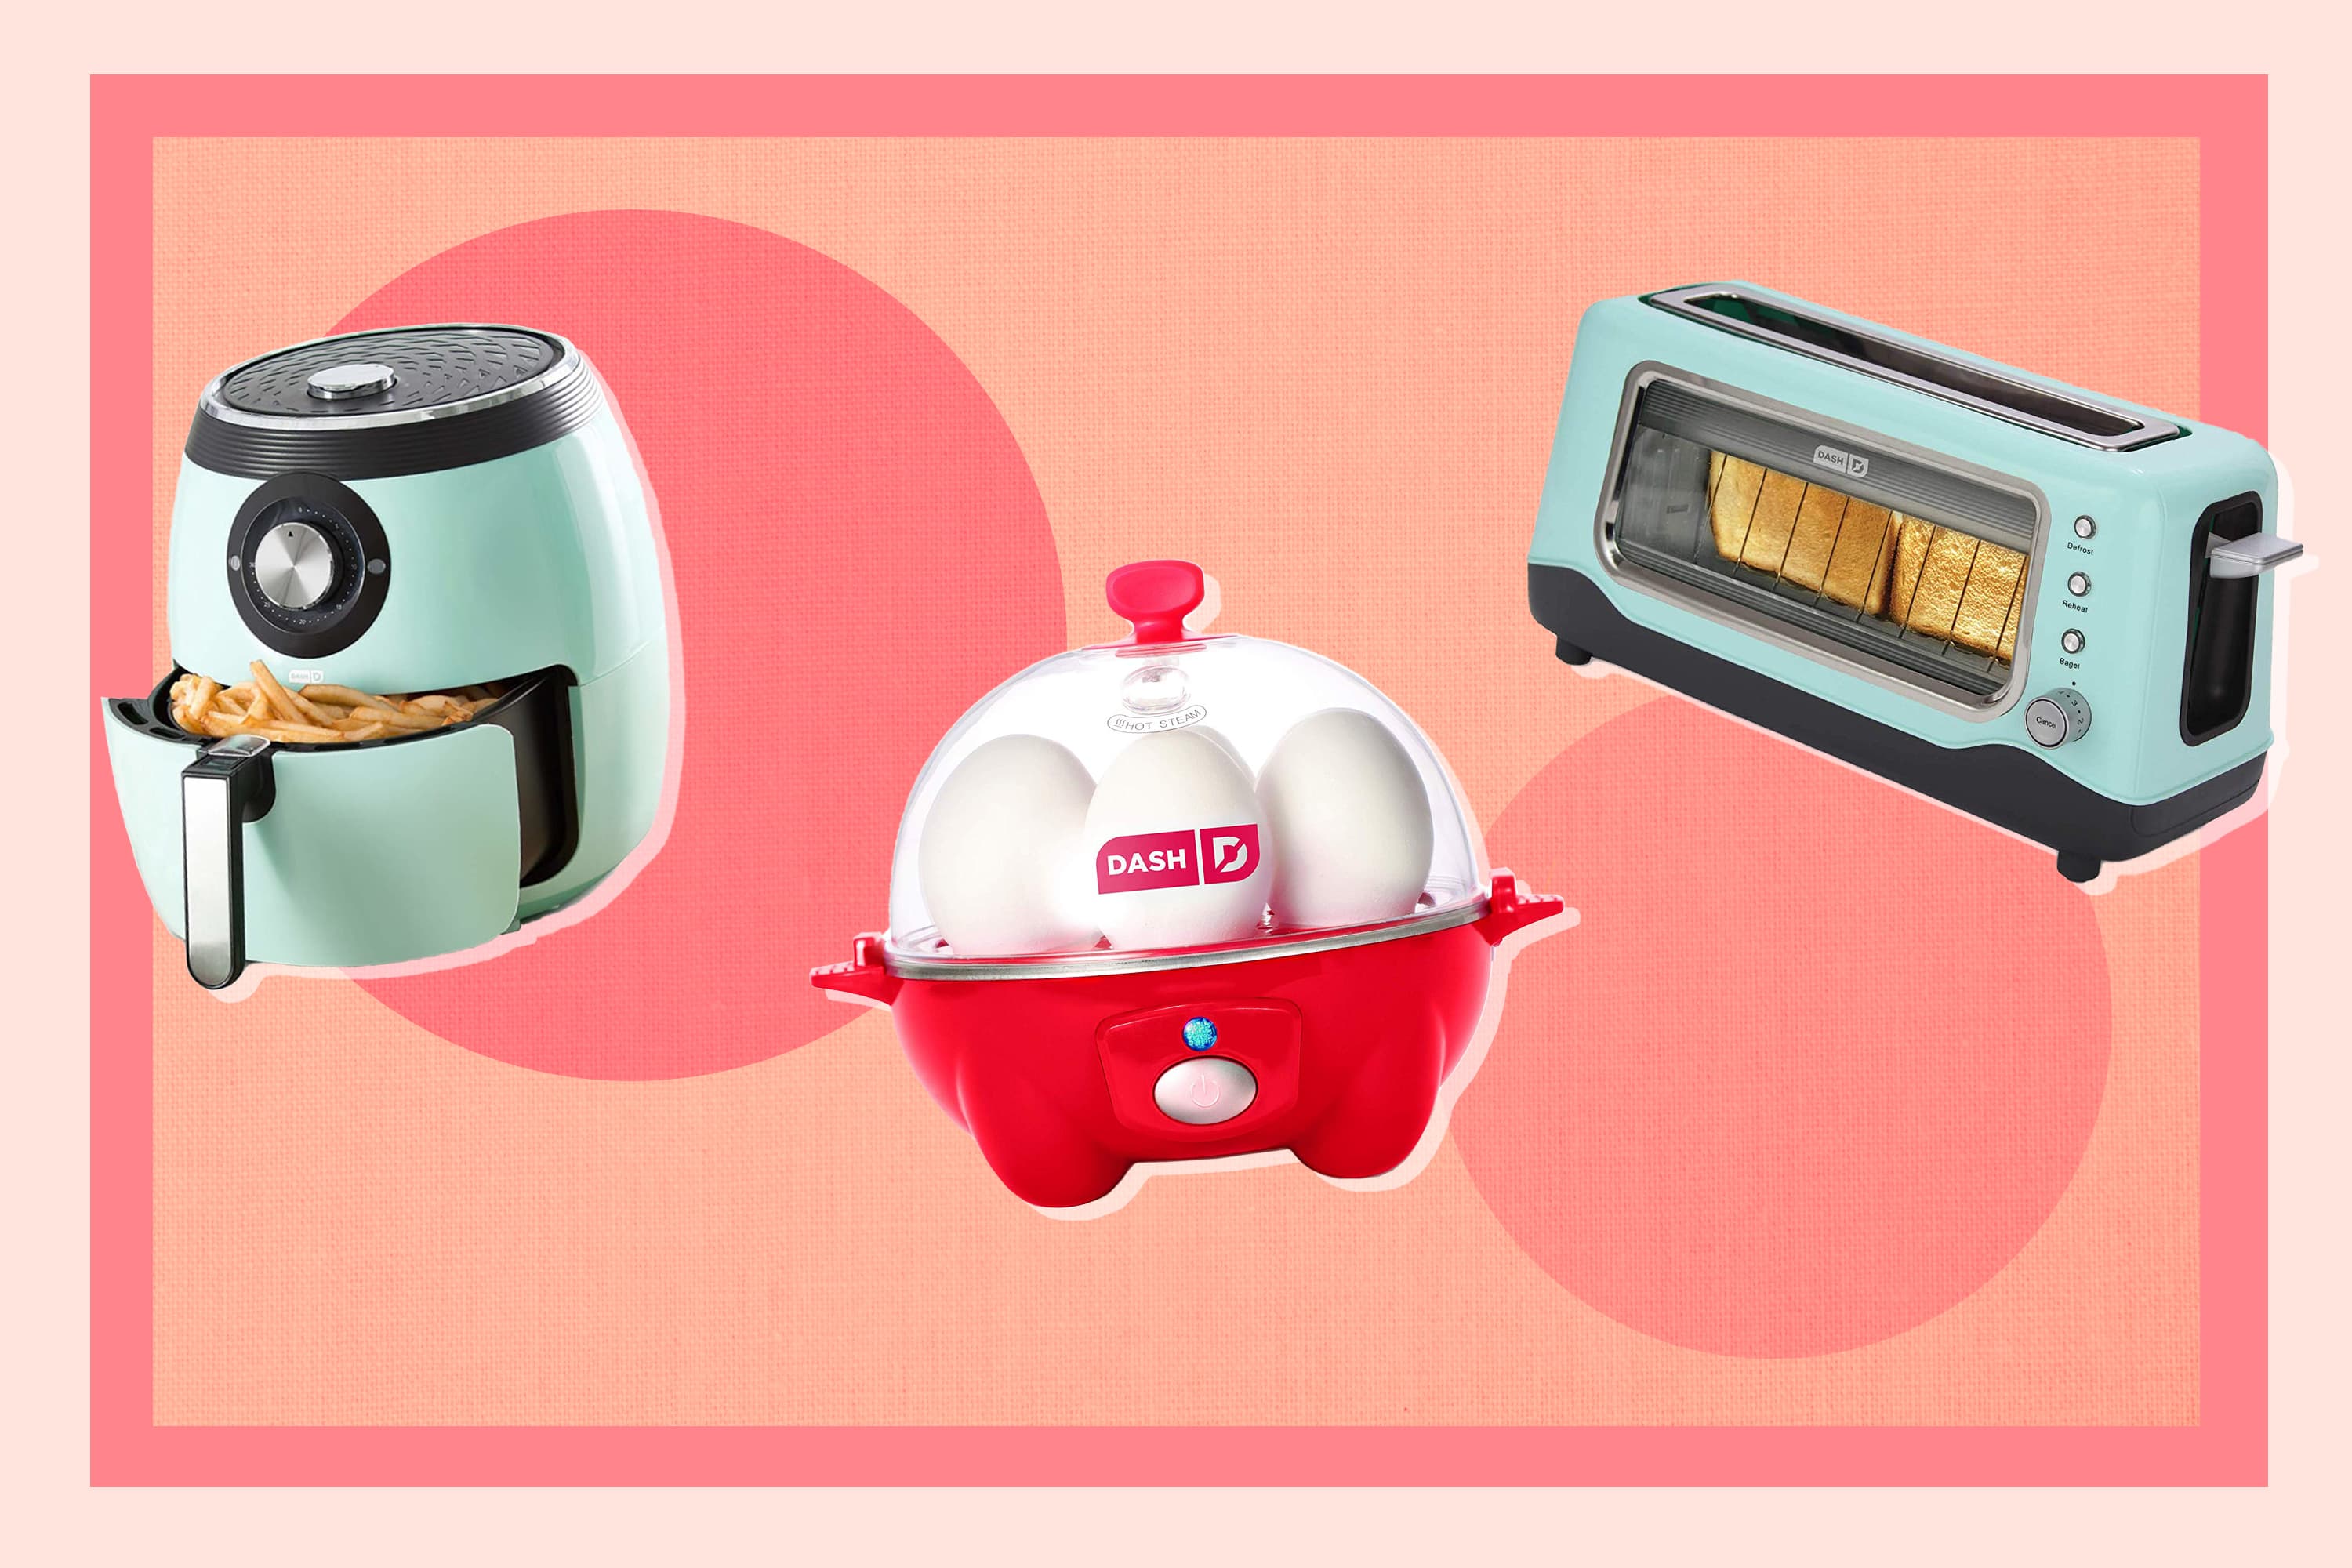 Dash Rapid Egg Cooker: The cult-favorite egg cooker is on sale again